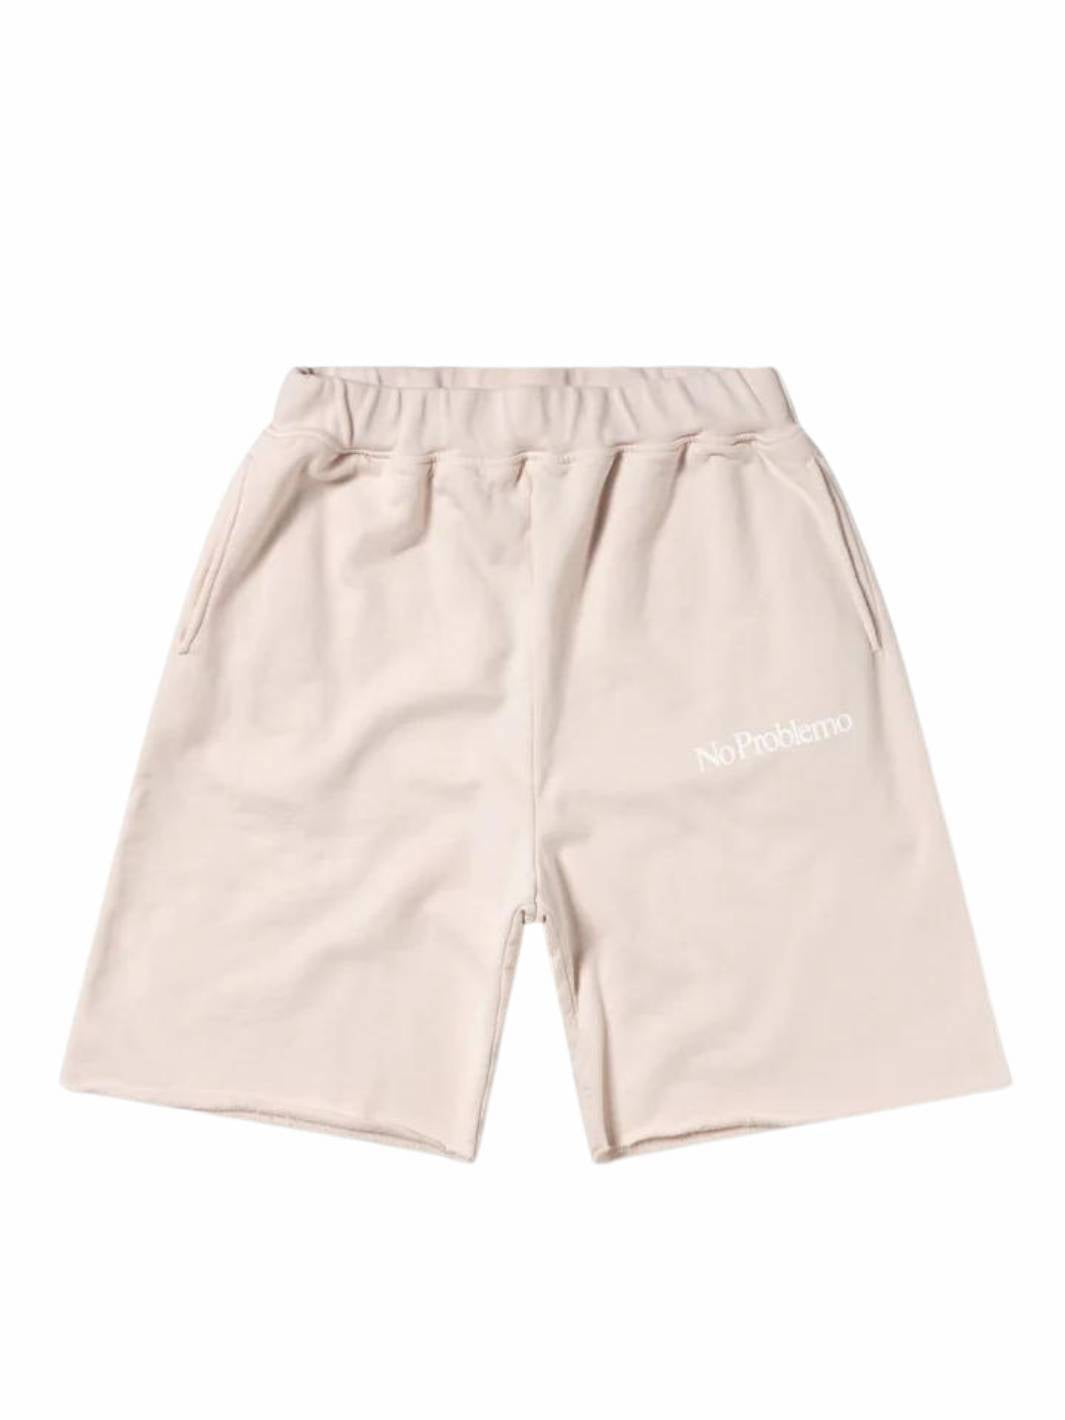 Aries Sweaters Shorts | Mini Problemo Sweatshort Pale Pink